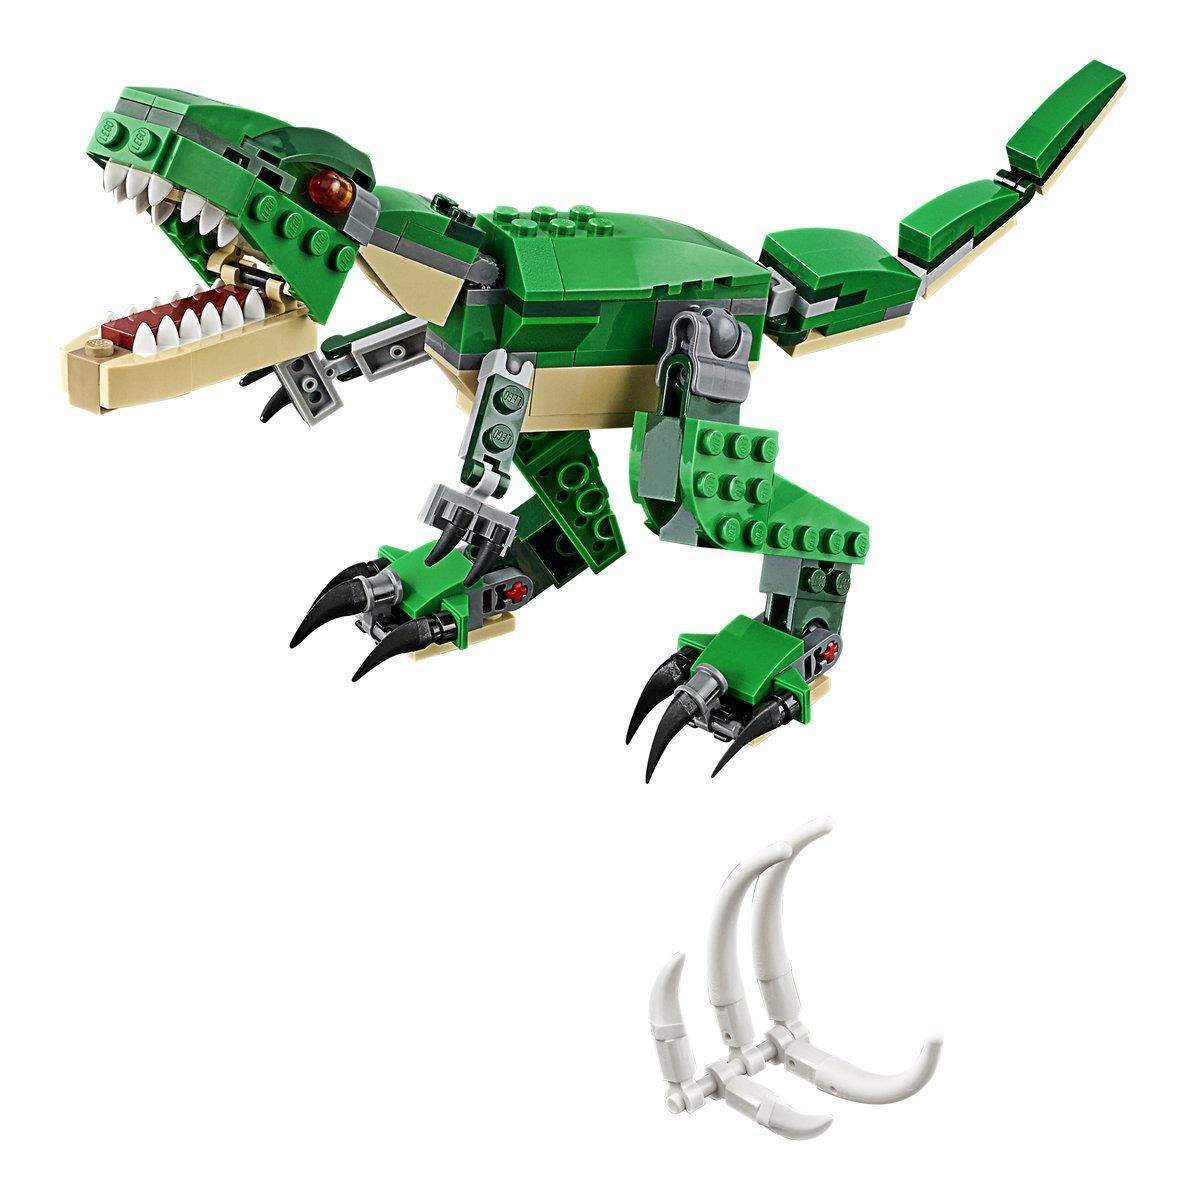 LEGO® Creator 31058 Dinosaurs